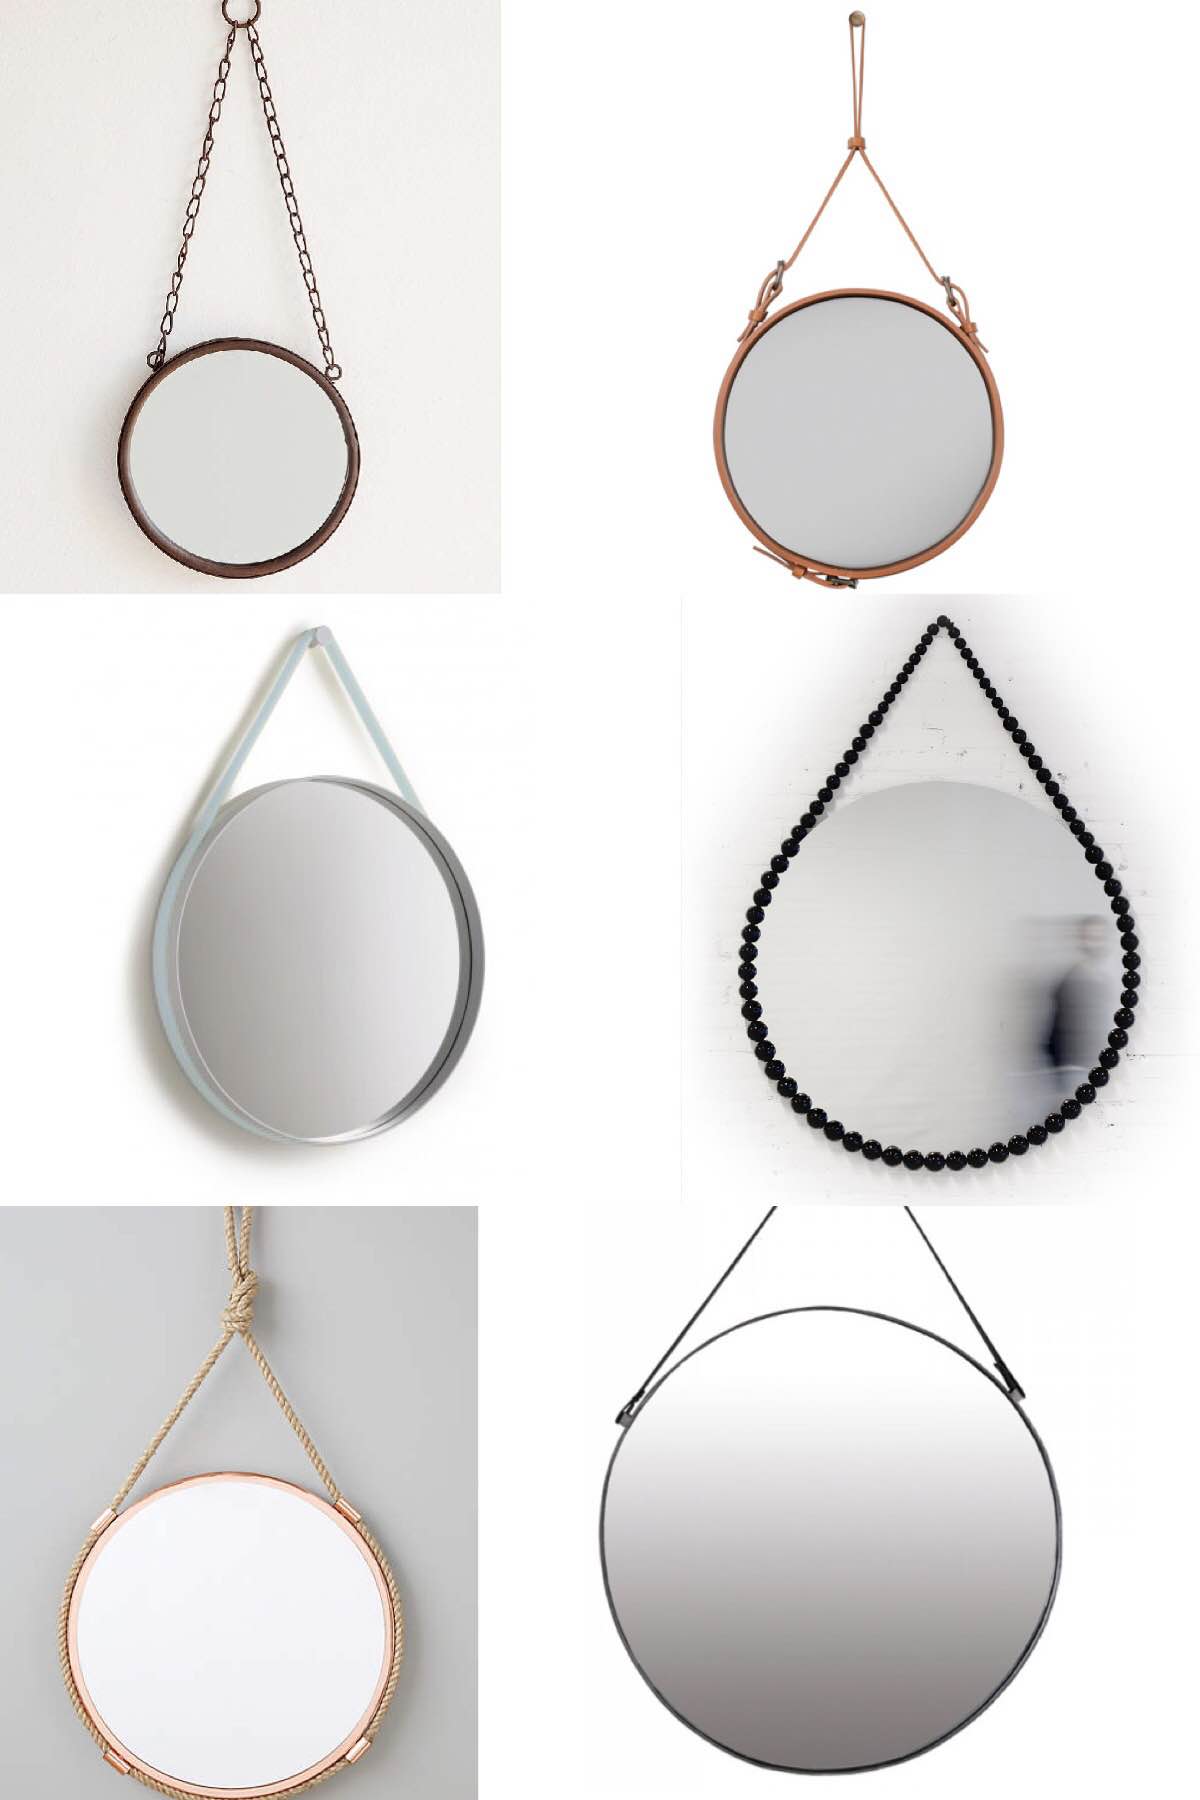 mirror decor trends - hanging circular mirrors